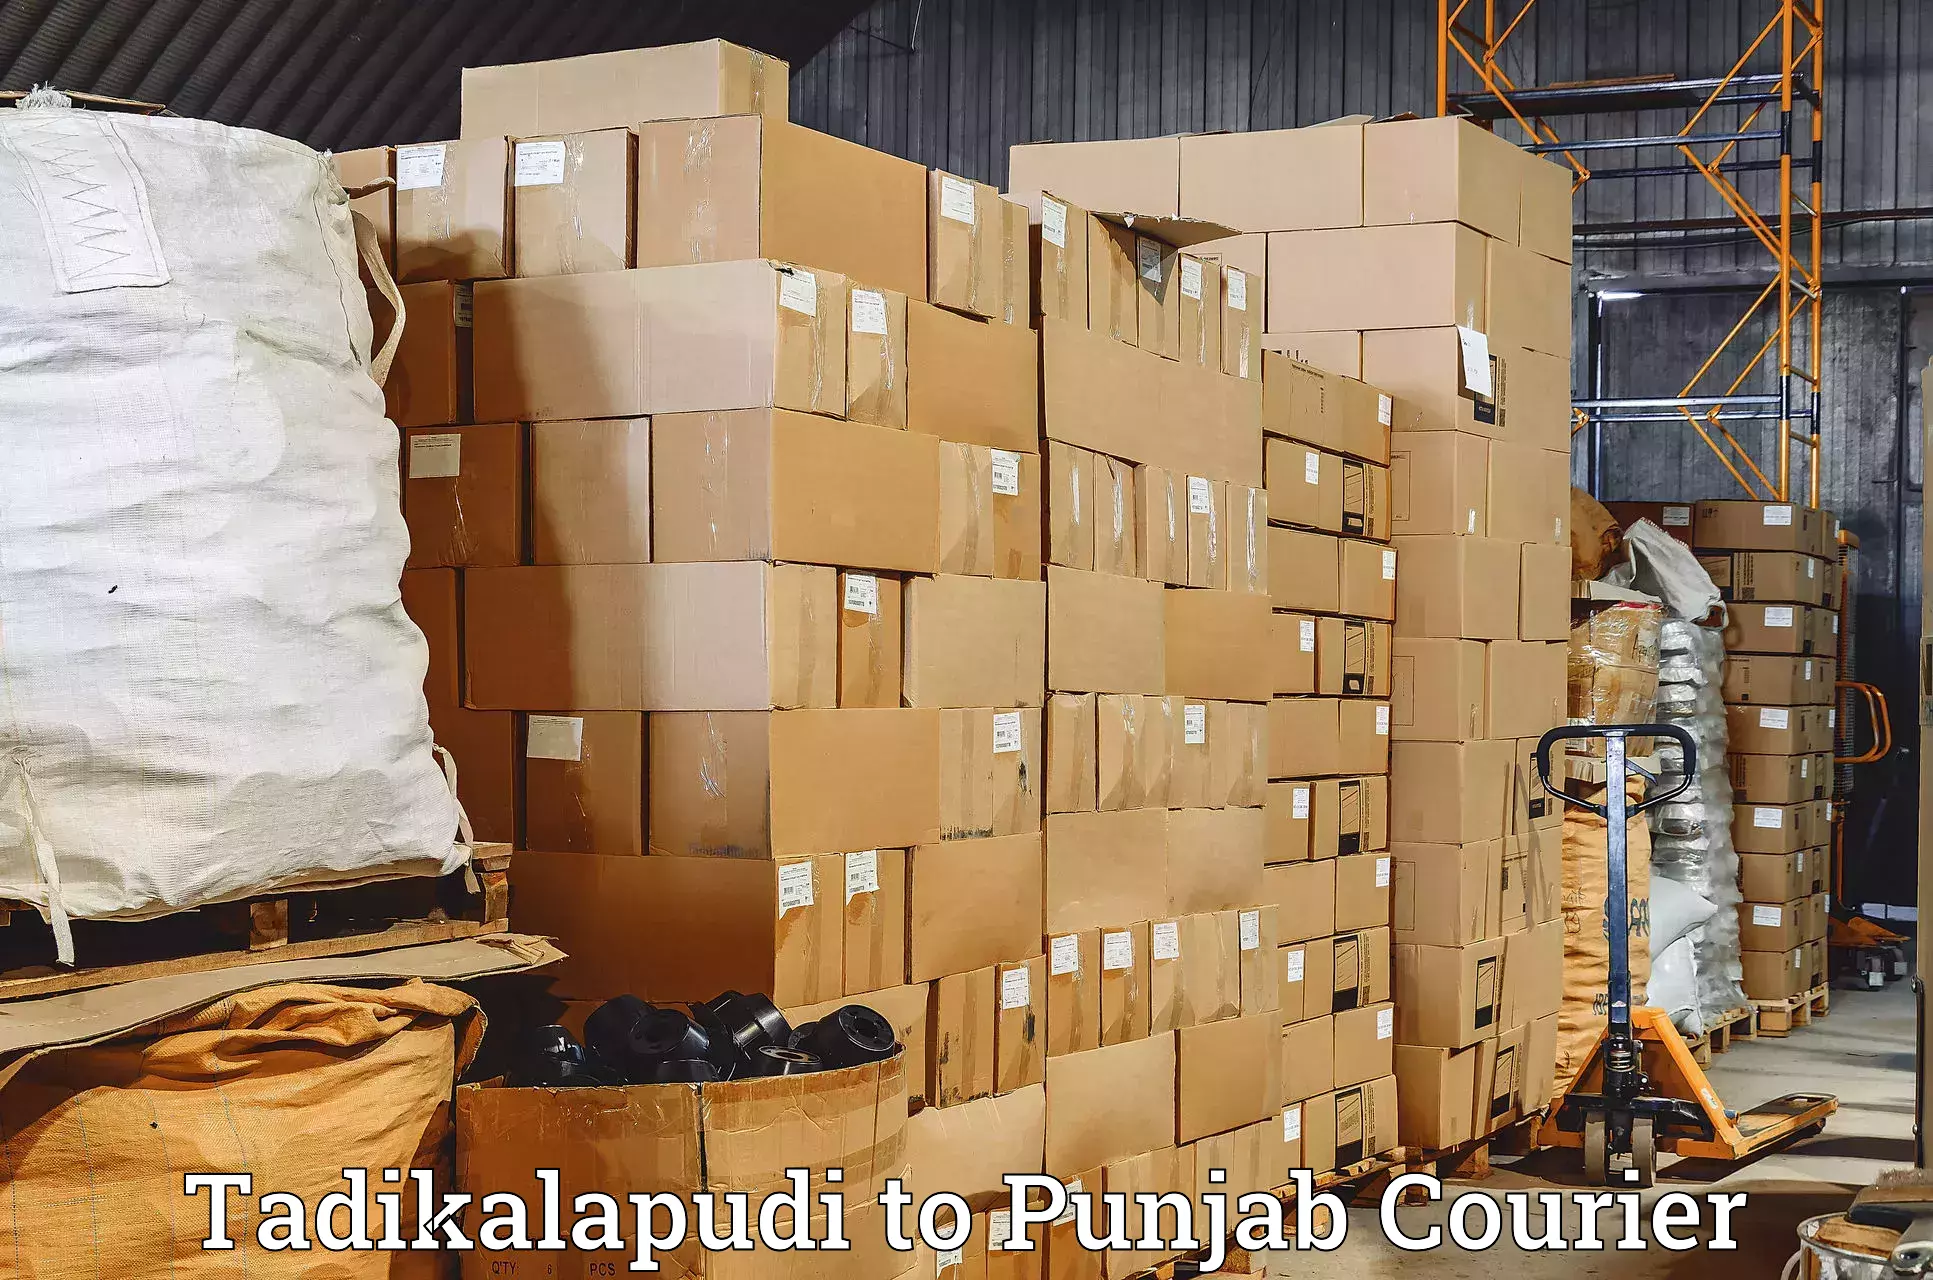 Parcel handling and care Tadikalapudi to Rajpura